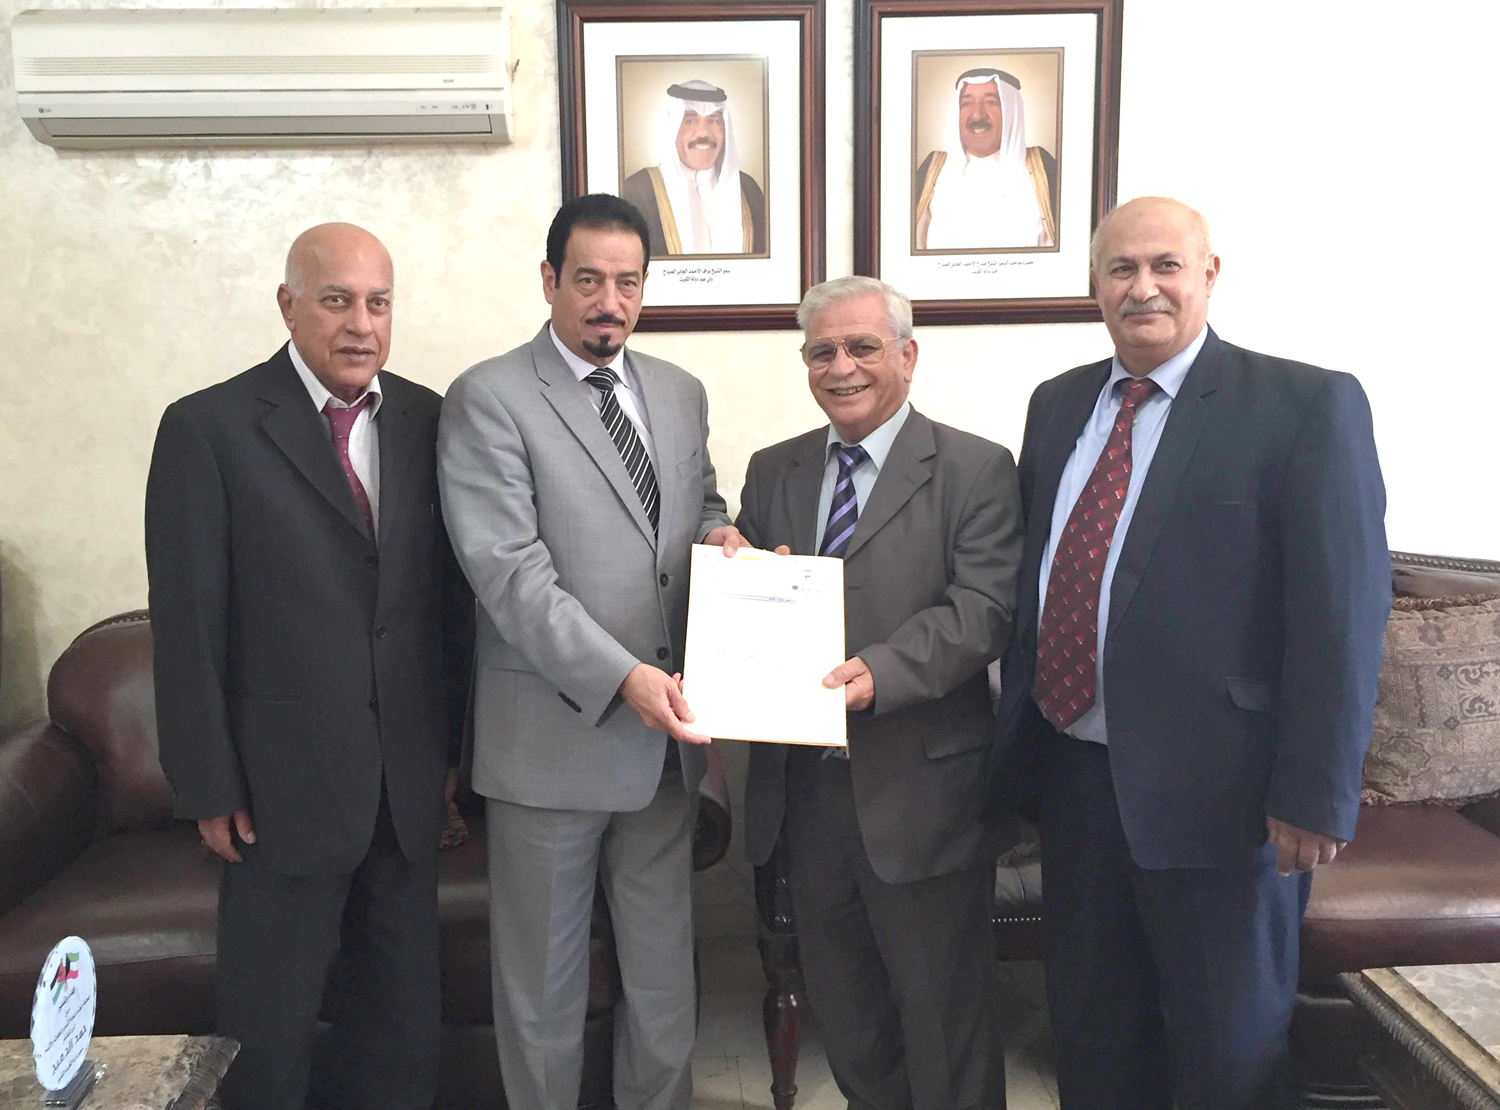 Kuwait Ambassador to Jordan Dr. Hamad Al-Duaij delivers financial assistance presented from the Zakat (alms) House to Al-Quds (Jerusalem) Open University